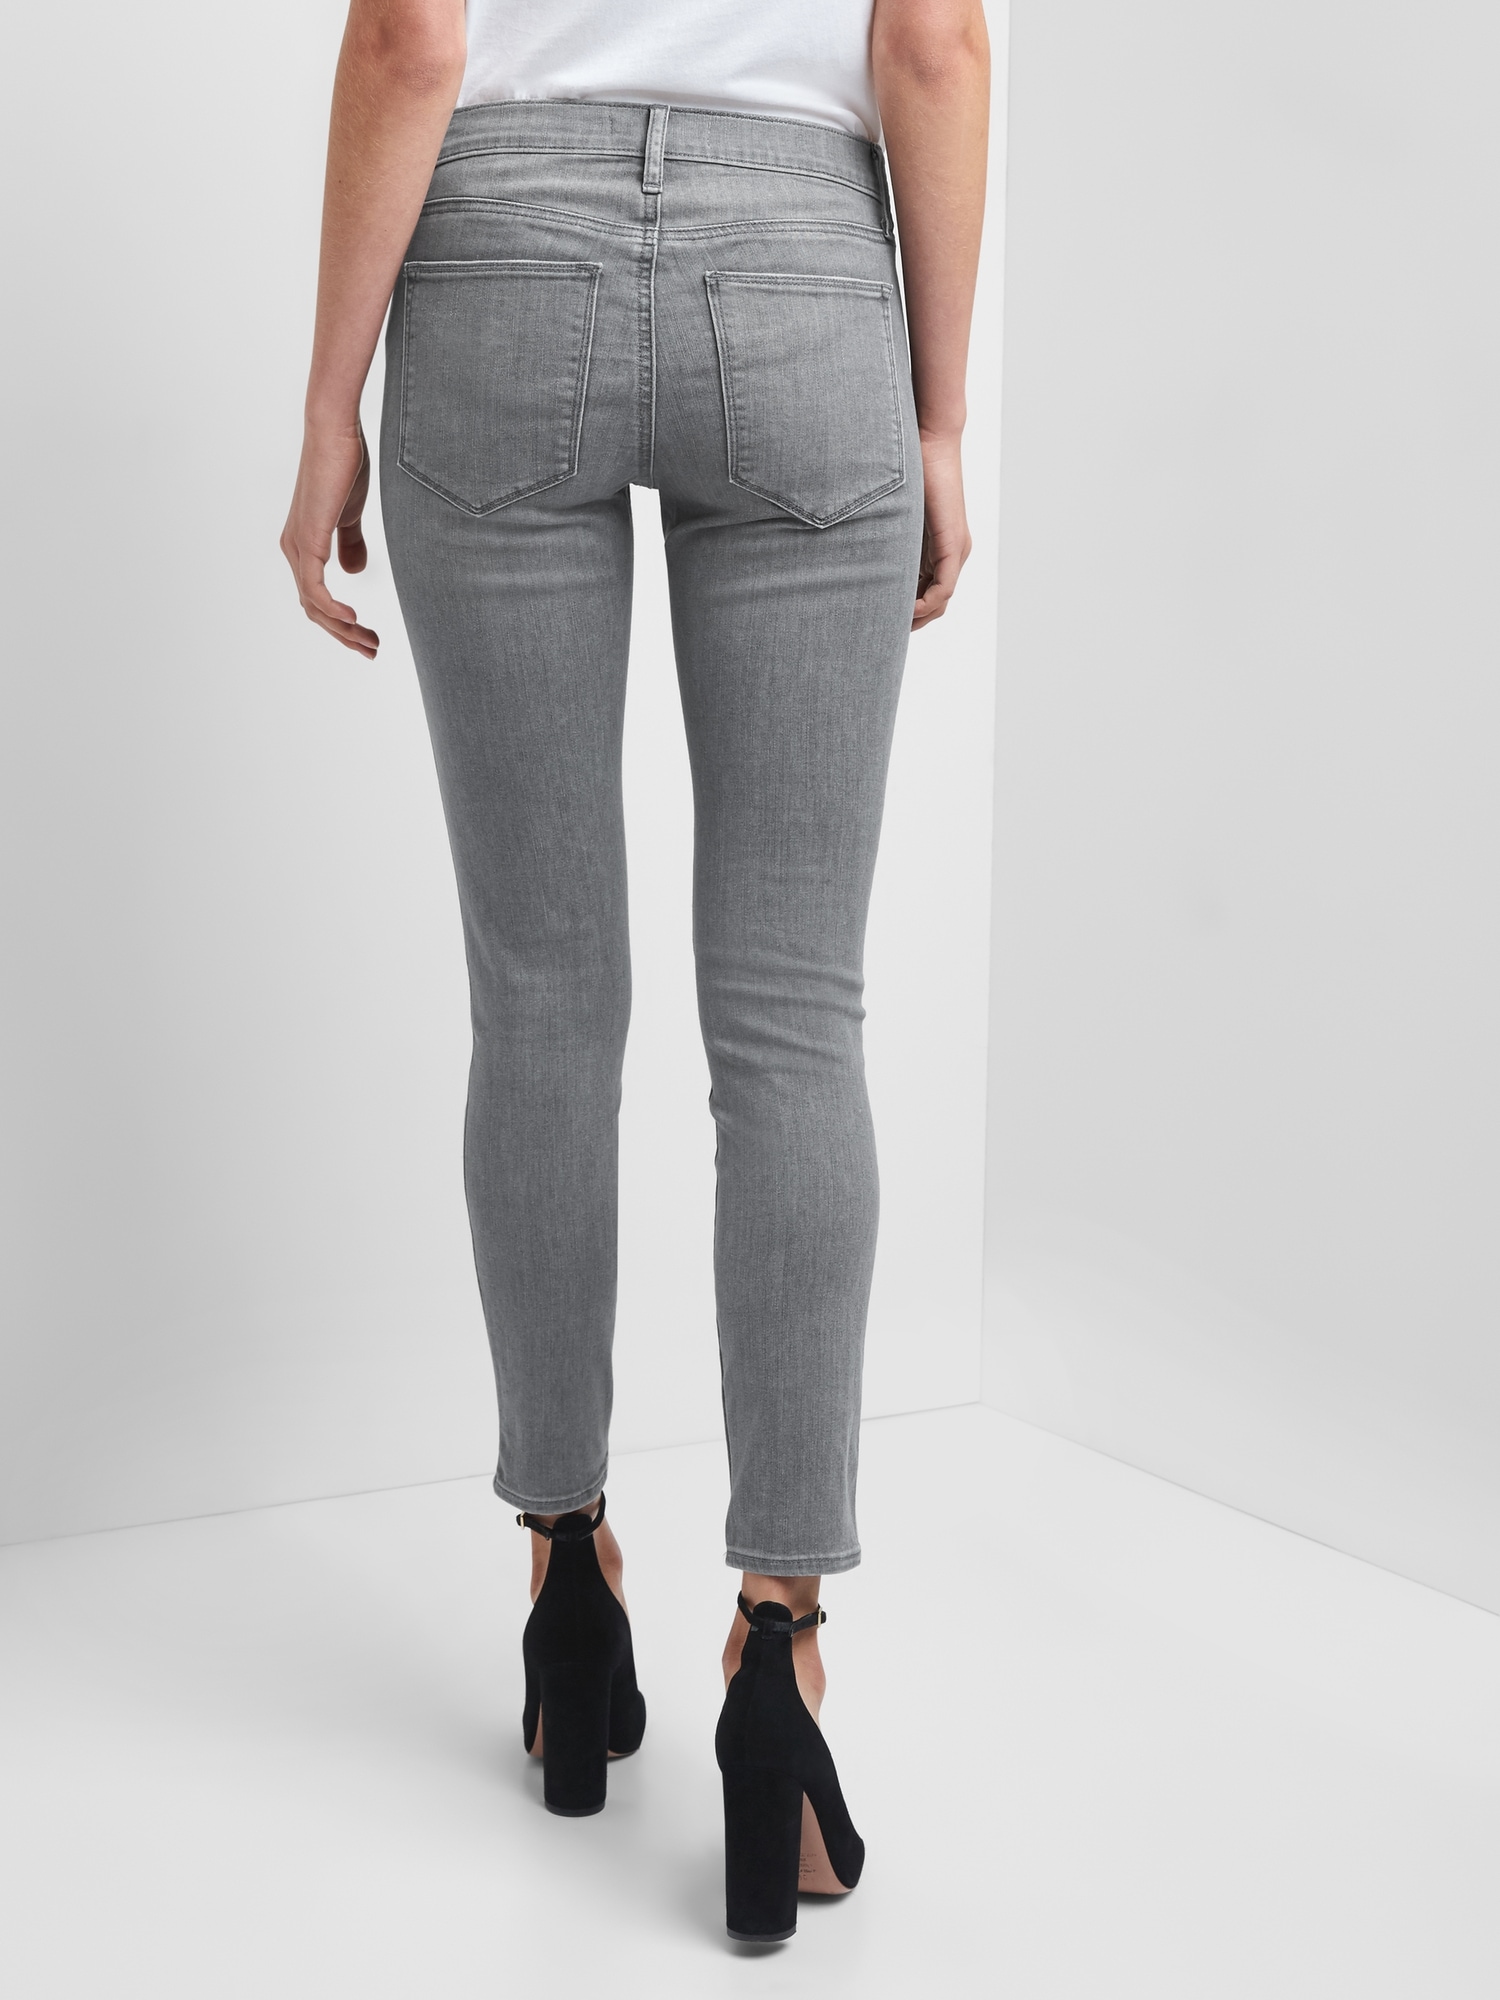 GAP, Jeans, Gap Jeans Womens 27 Short True Skinny Midrise Denim Jeggings  Dark Grey Casual